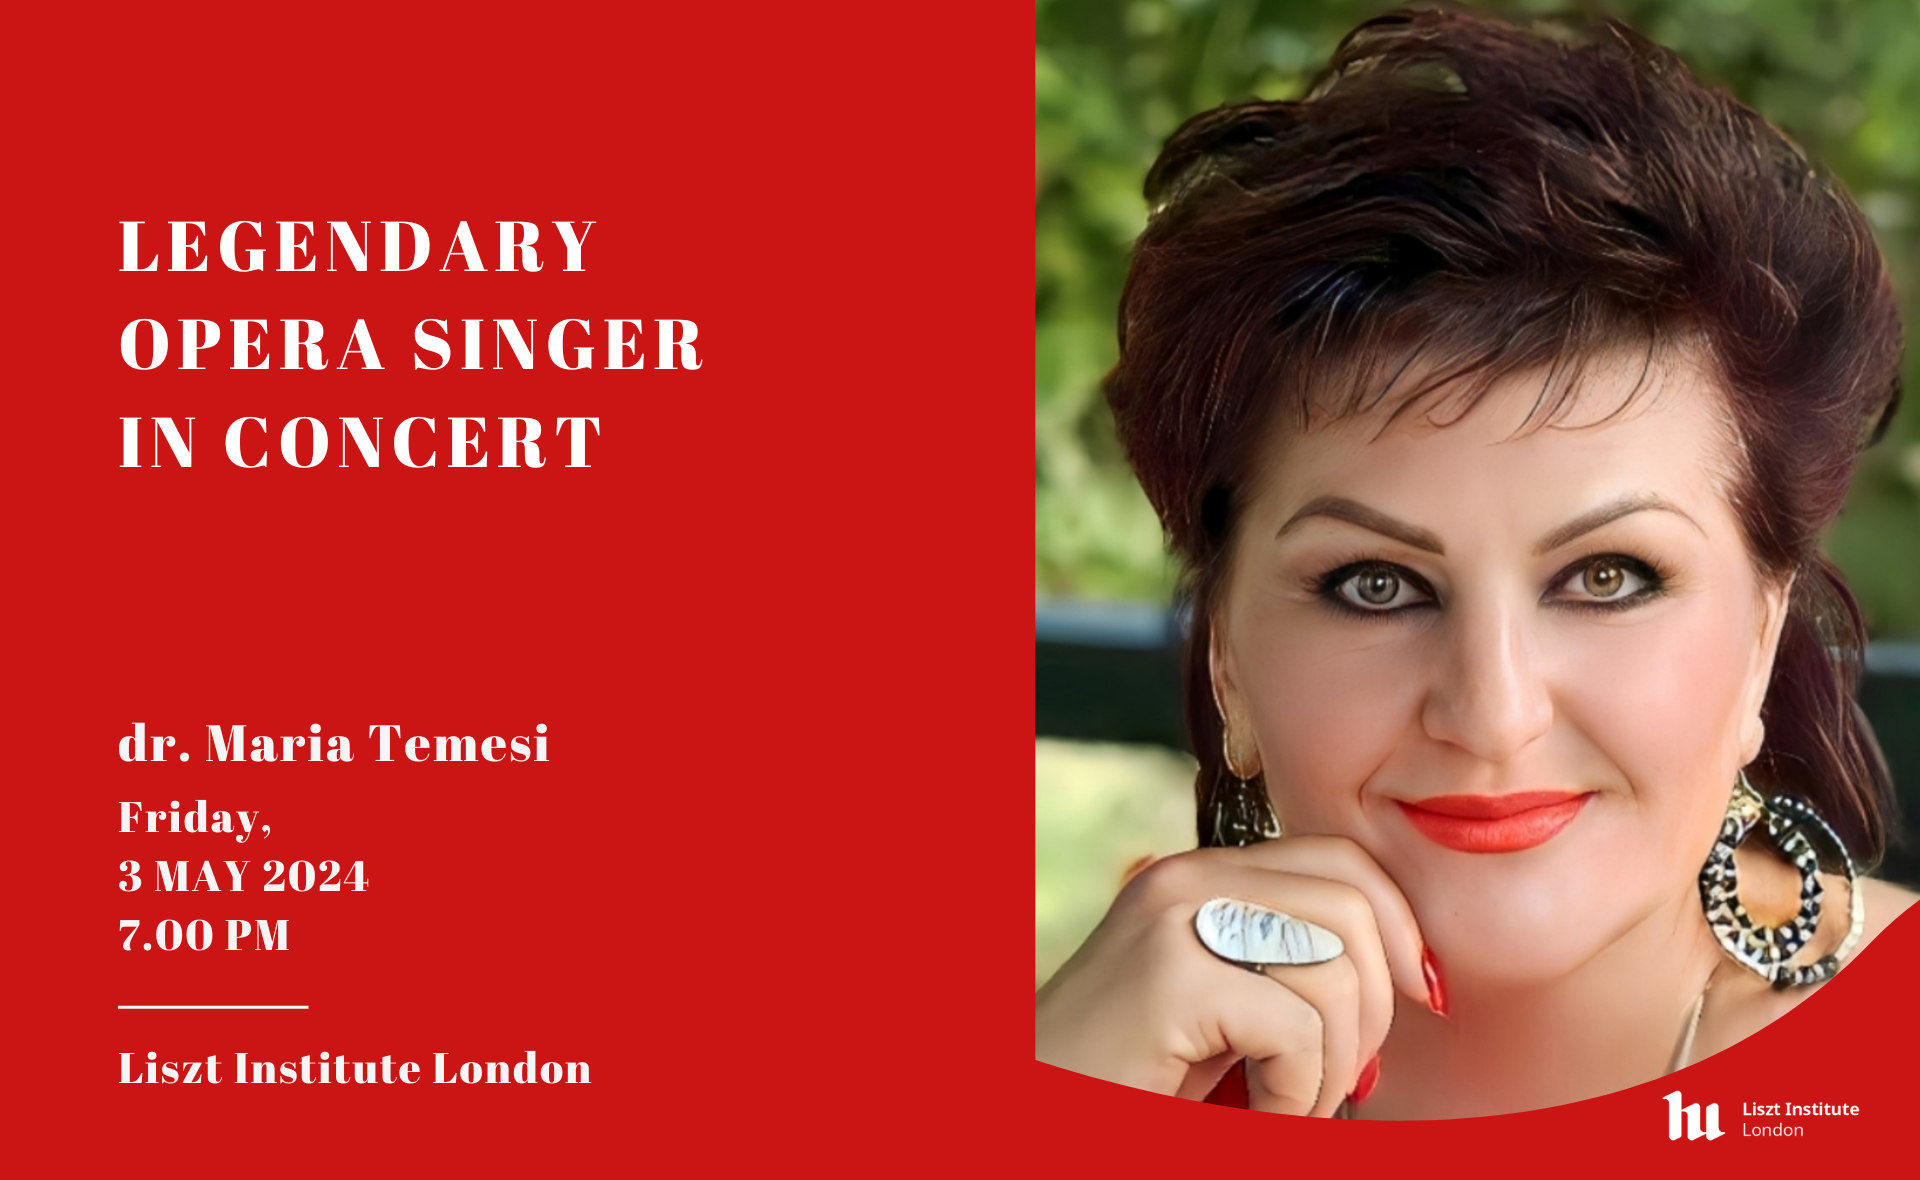 Legendary opera singer in concert - dr. Maria Temesi